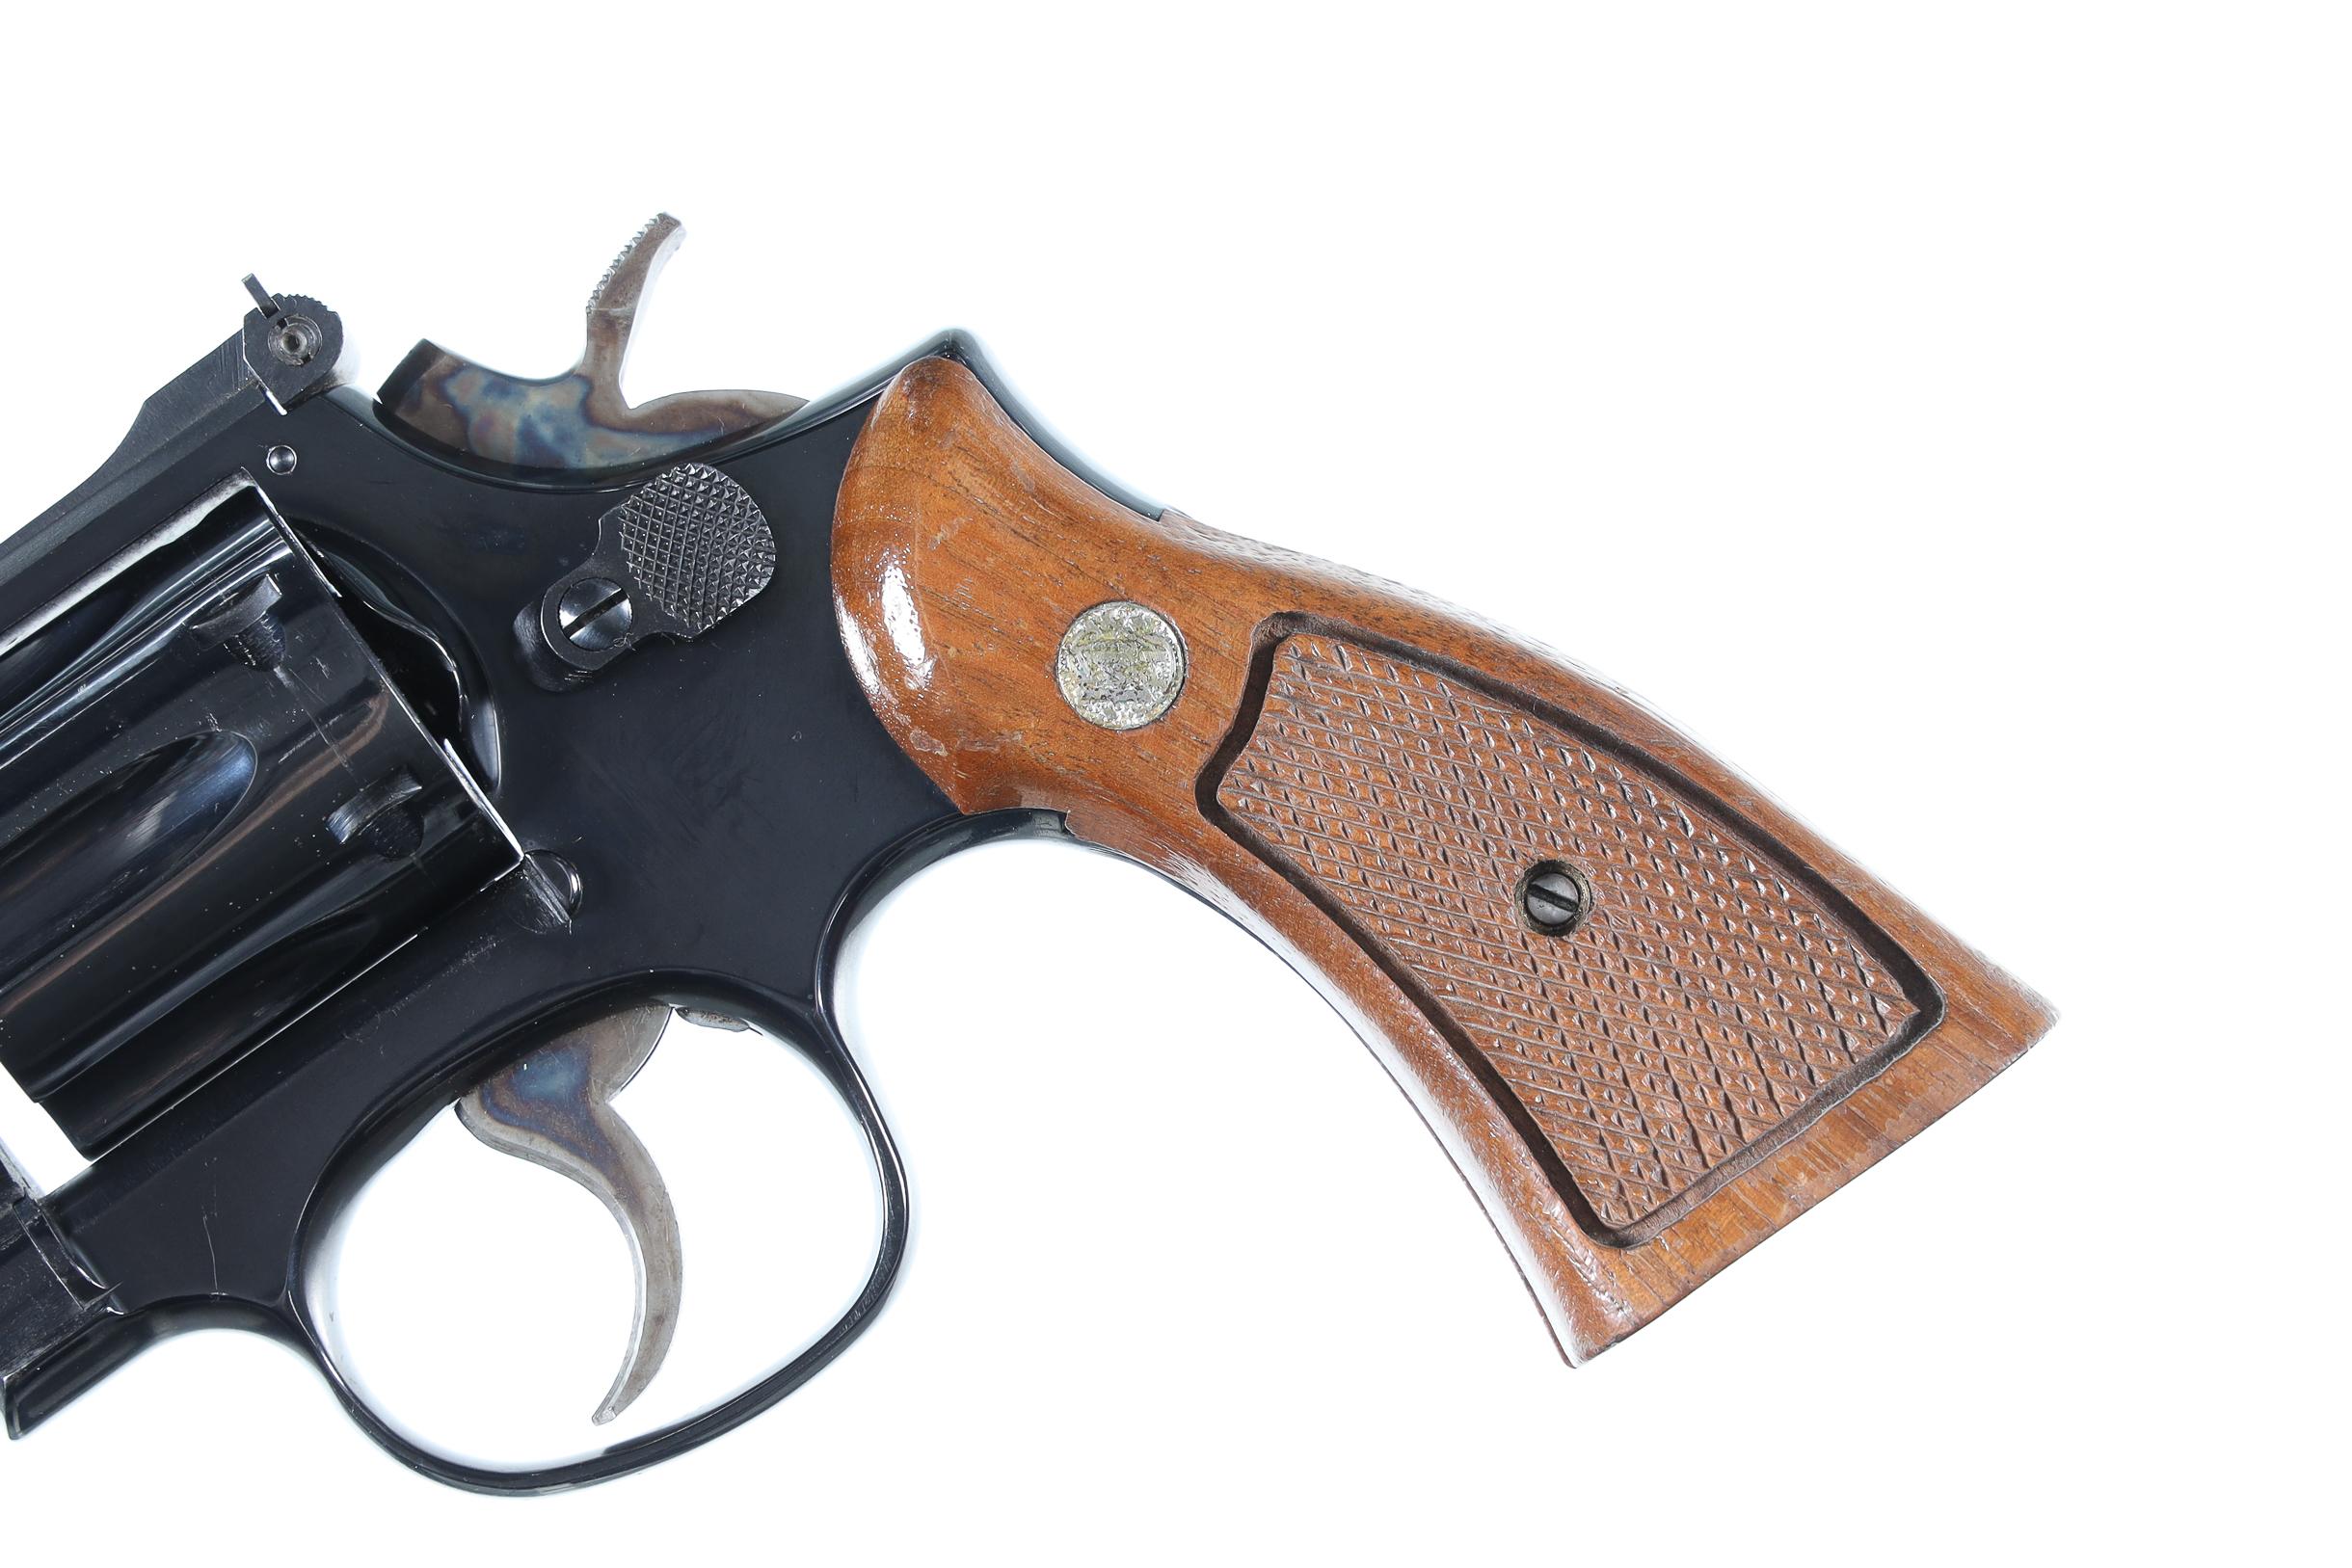 Smith & Wesson 17-4 Revolver .22 lr